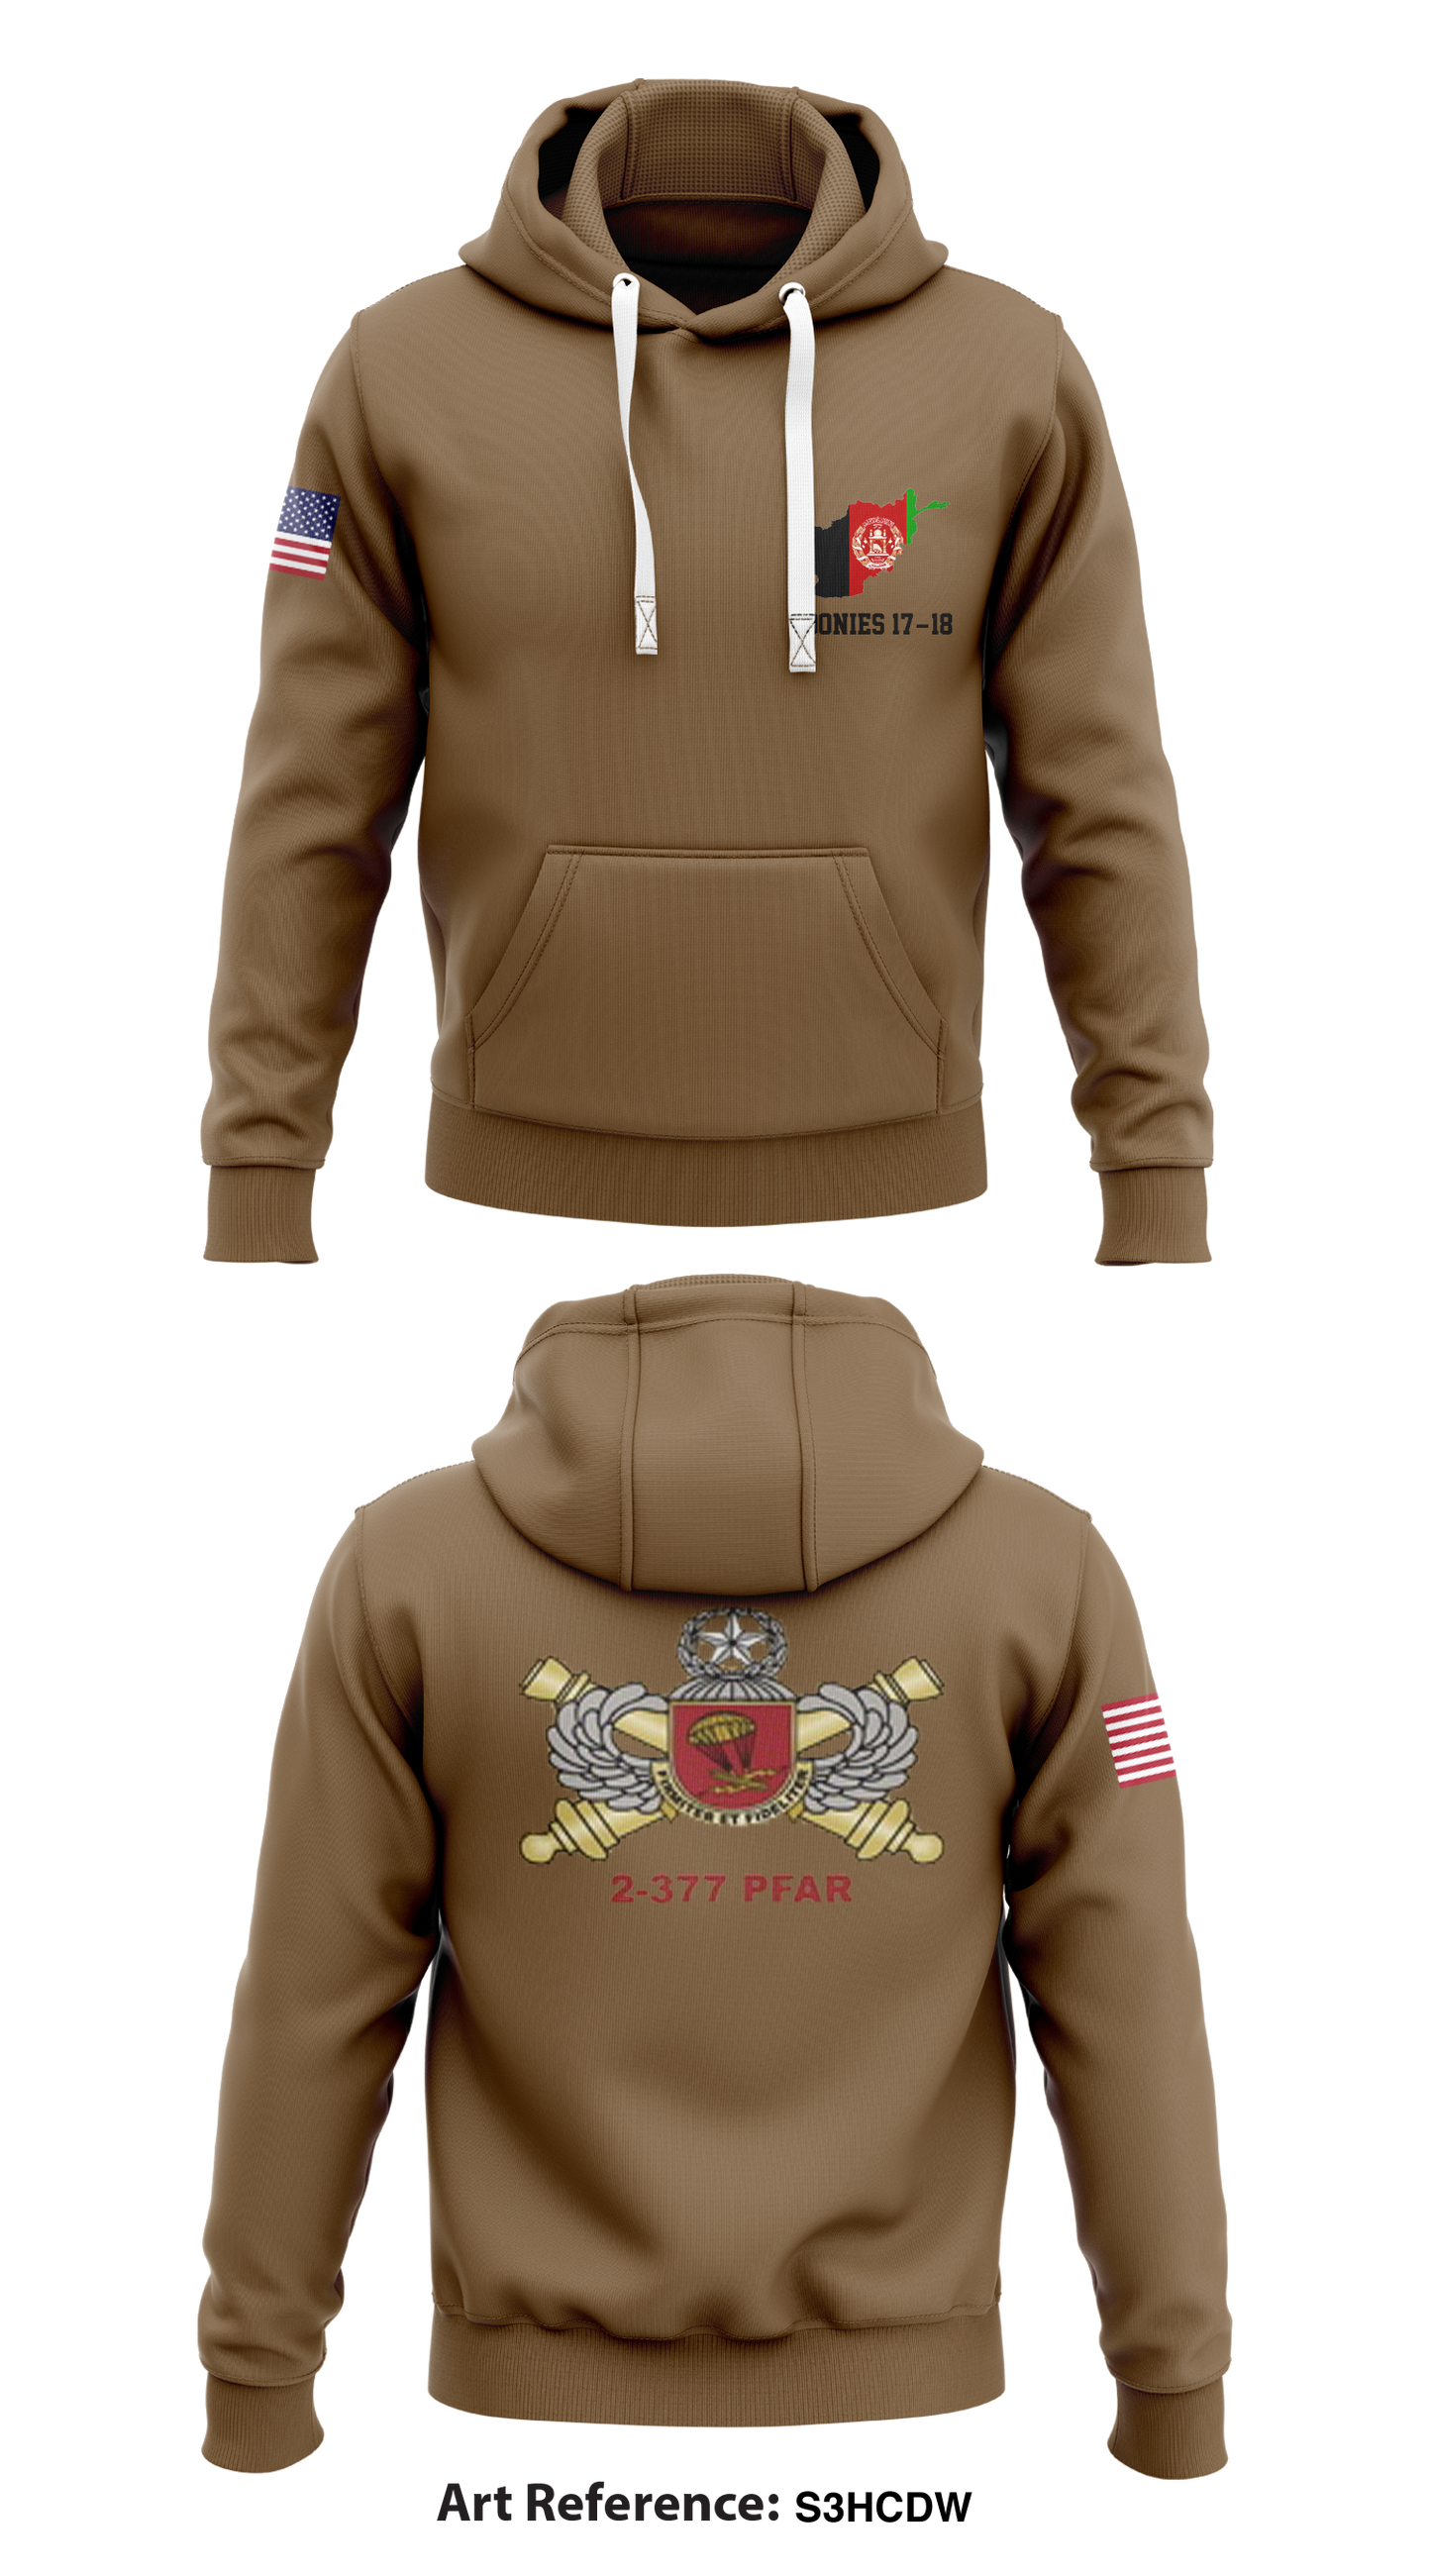 2/377 PFAR C BTRY Store 1  Core Men's Hooded Performance Sweatshirt - s3HcdW